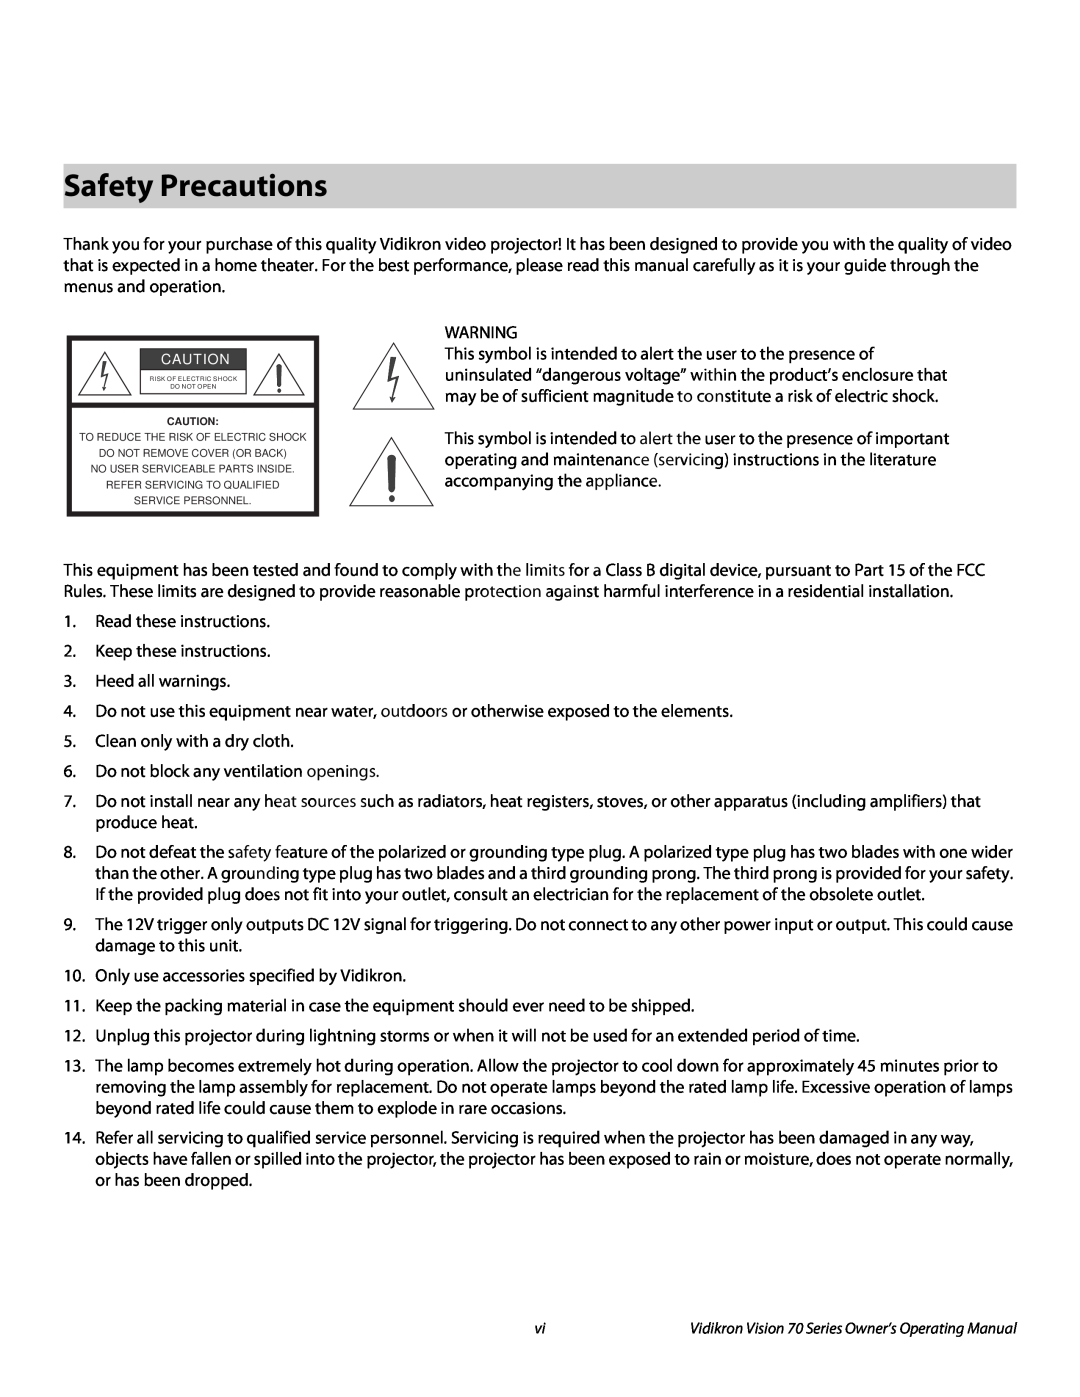 Vidikron SERIES 1080p manual Safety Precautions 